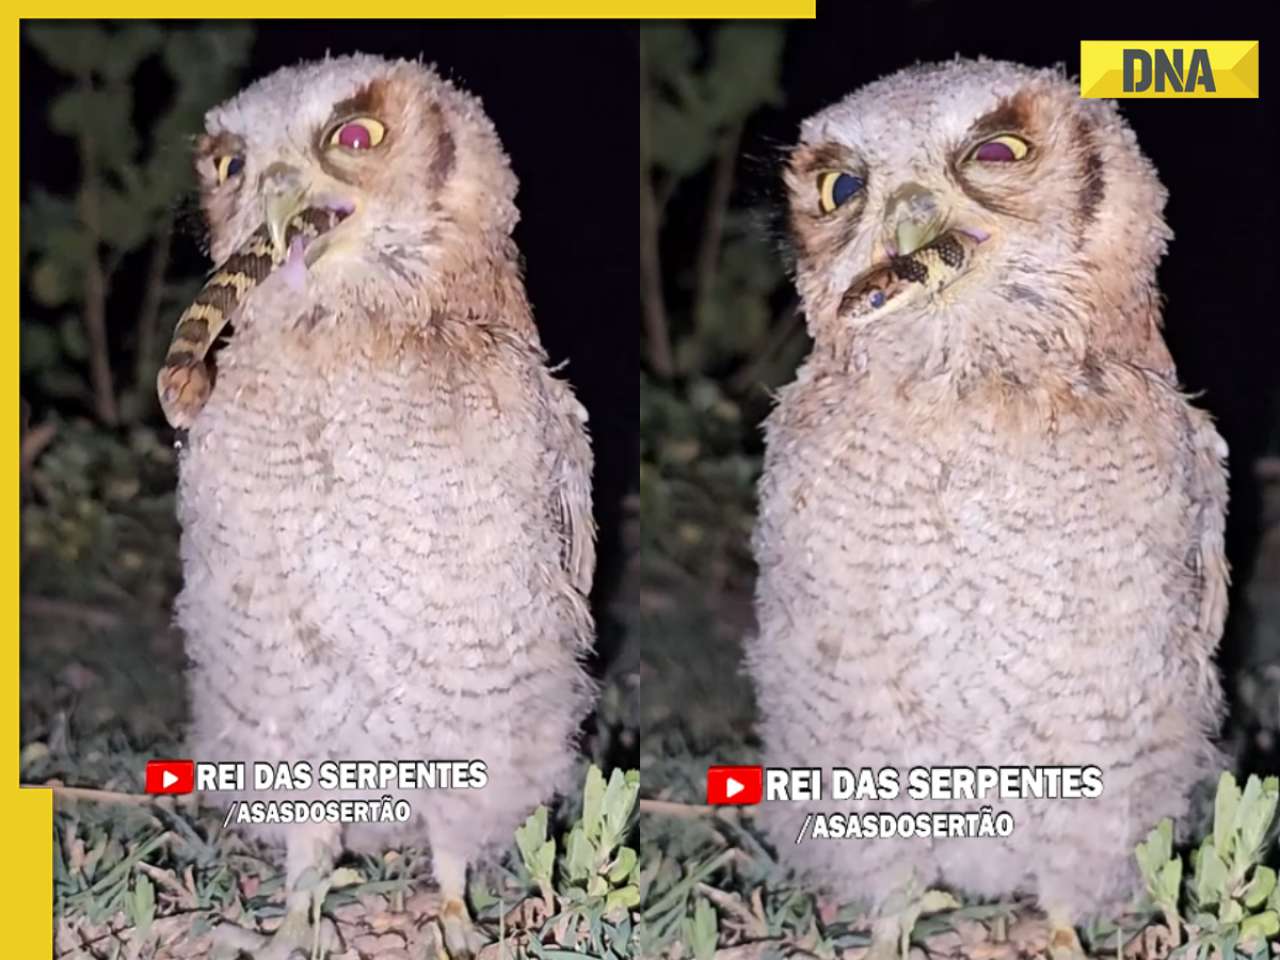 Owl swallows snake in one go, viral video shocks internet